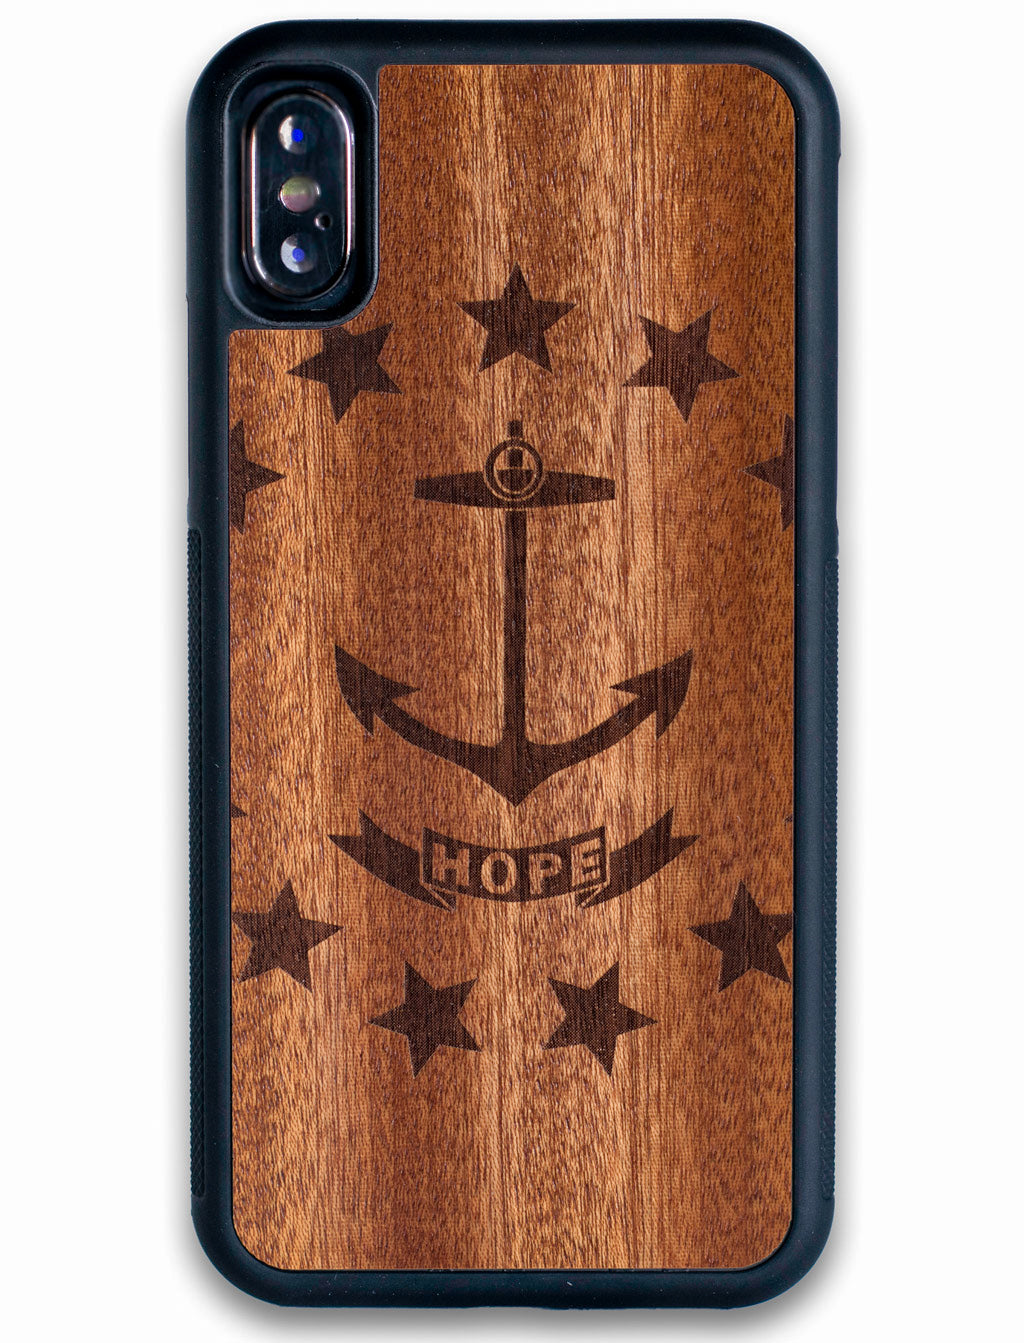 Rhode Island wooden iPhone X case